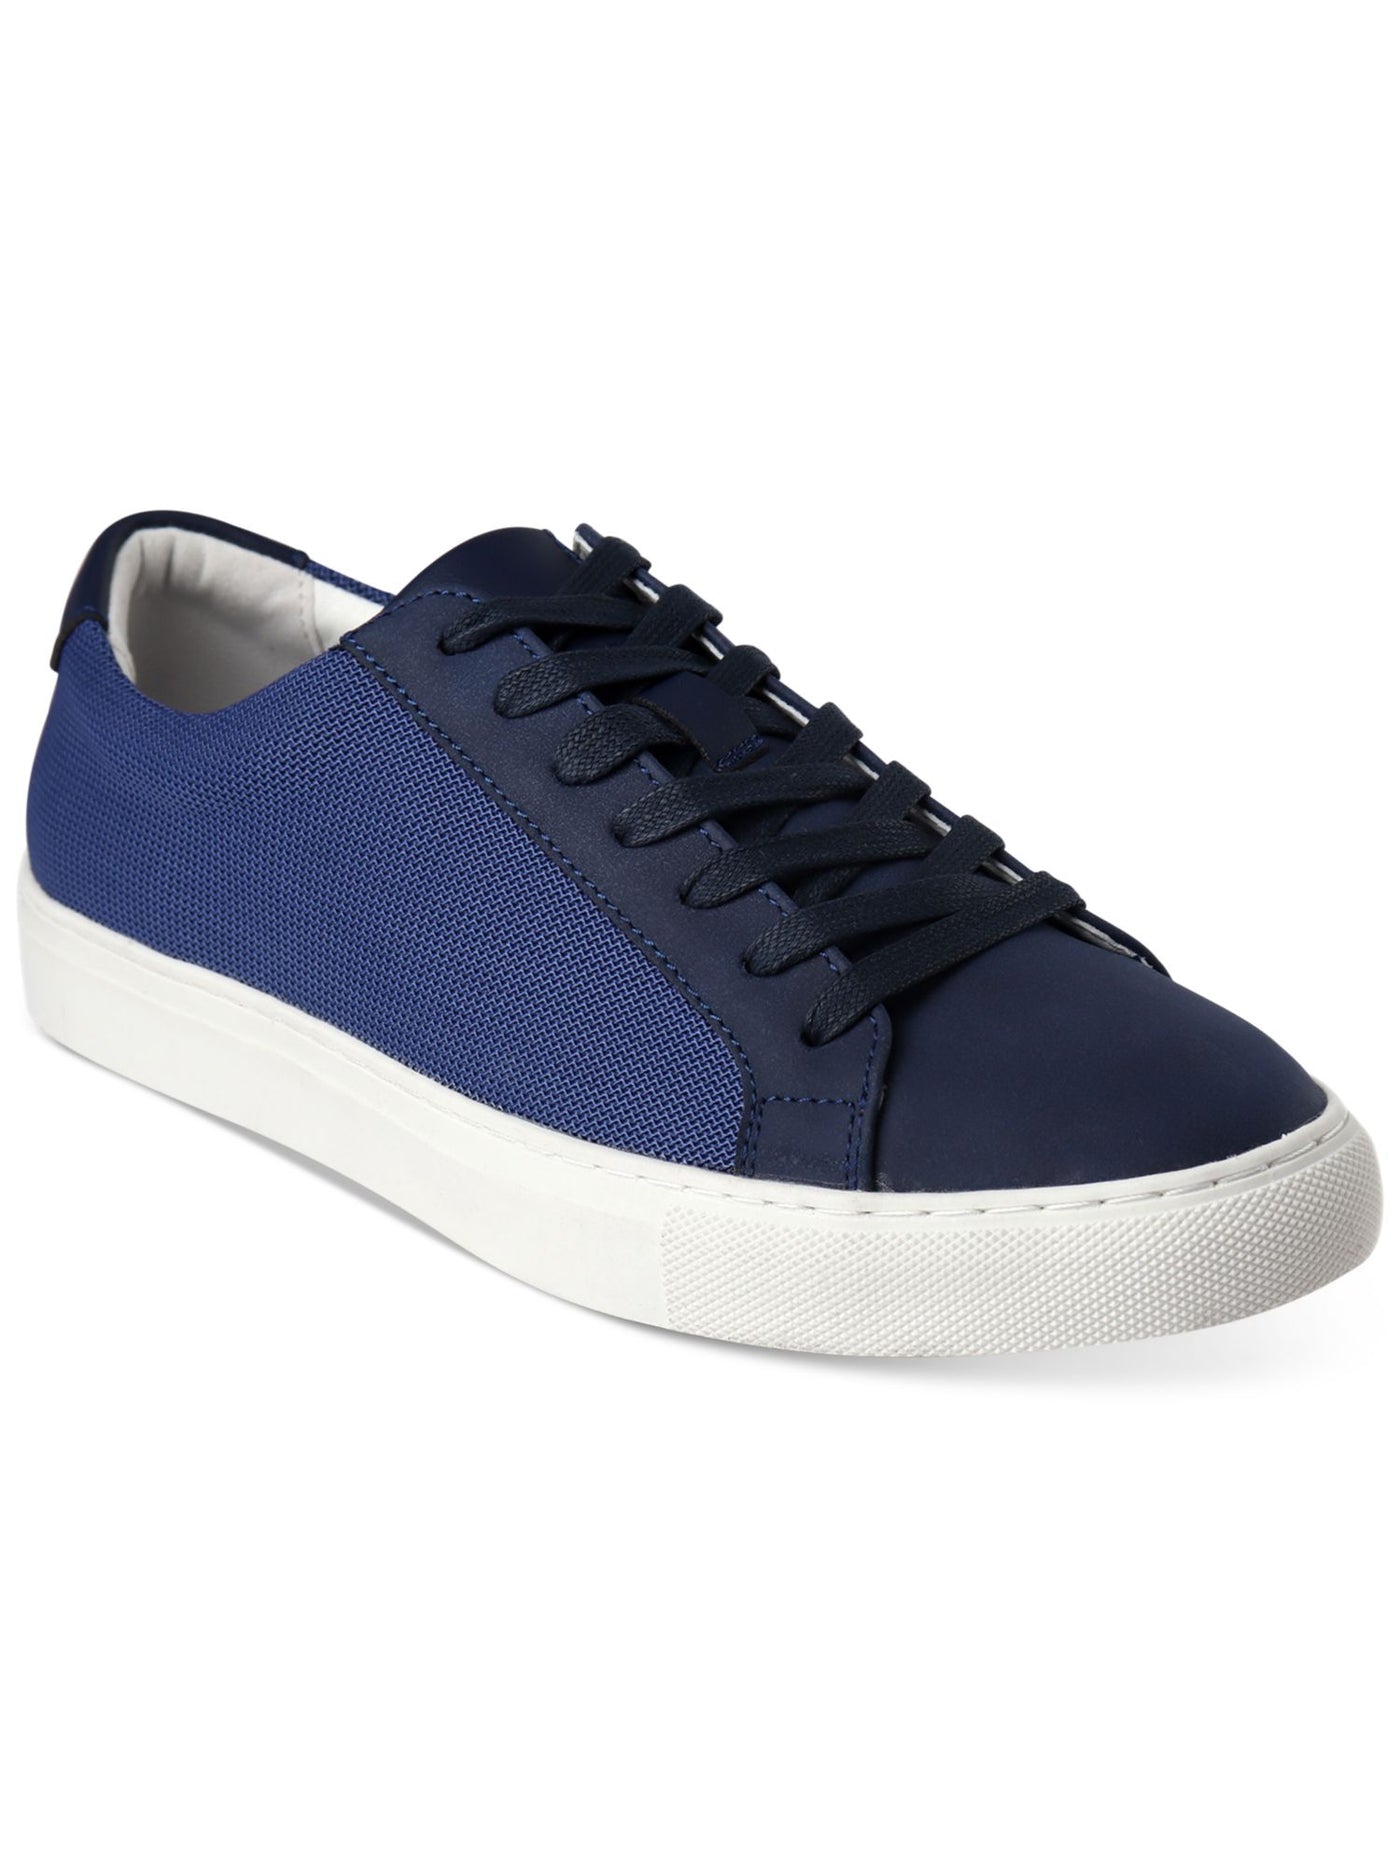 ALFANI Mens Blue Comfort Grayson Round Toe Platform Lace-Up Athletic Sneakers Shoes 12 M